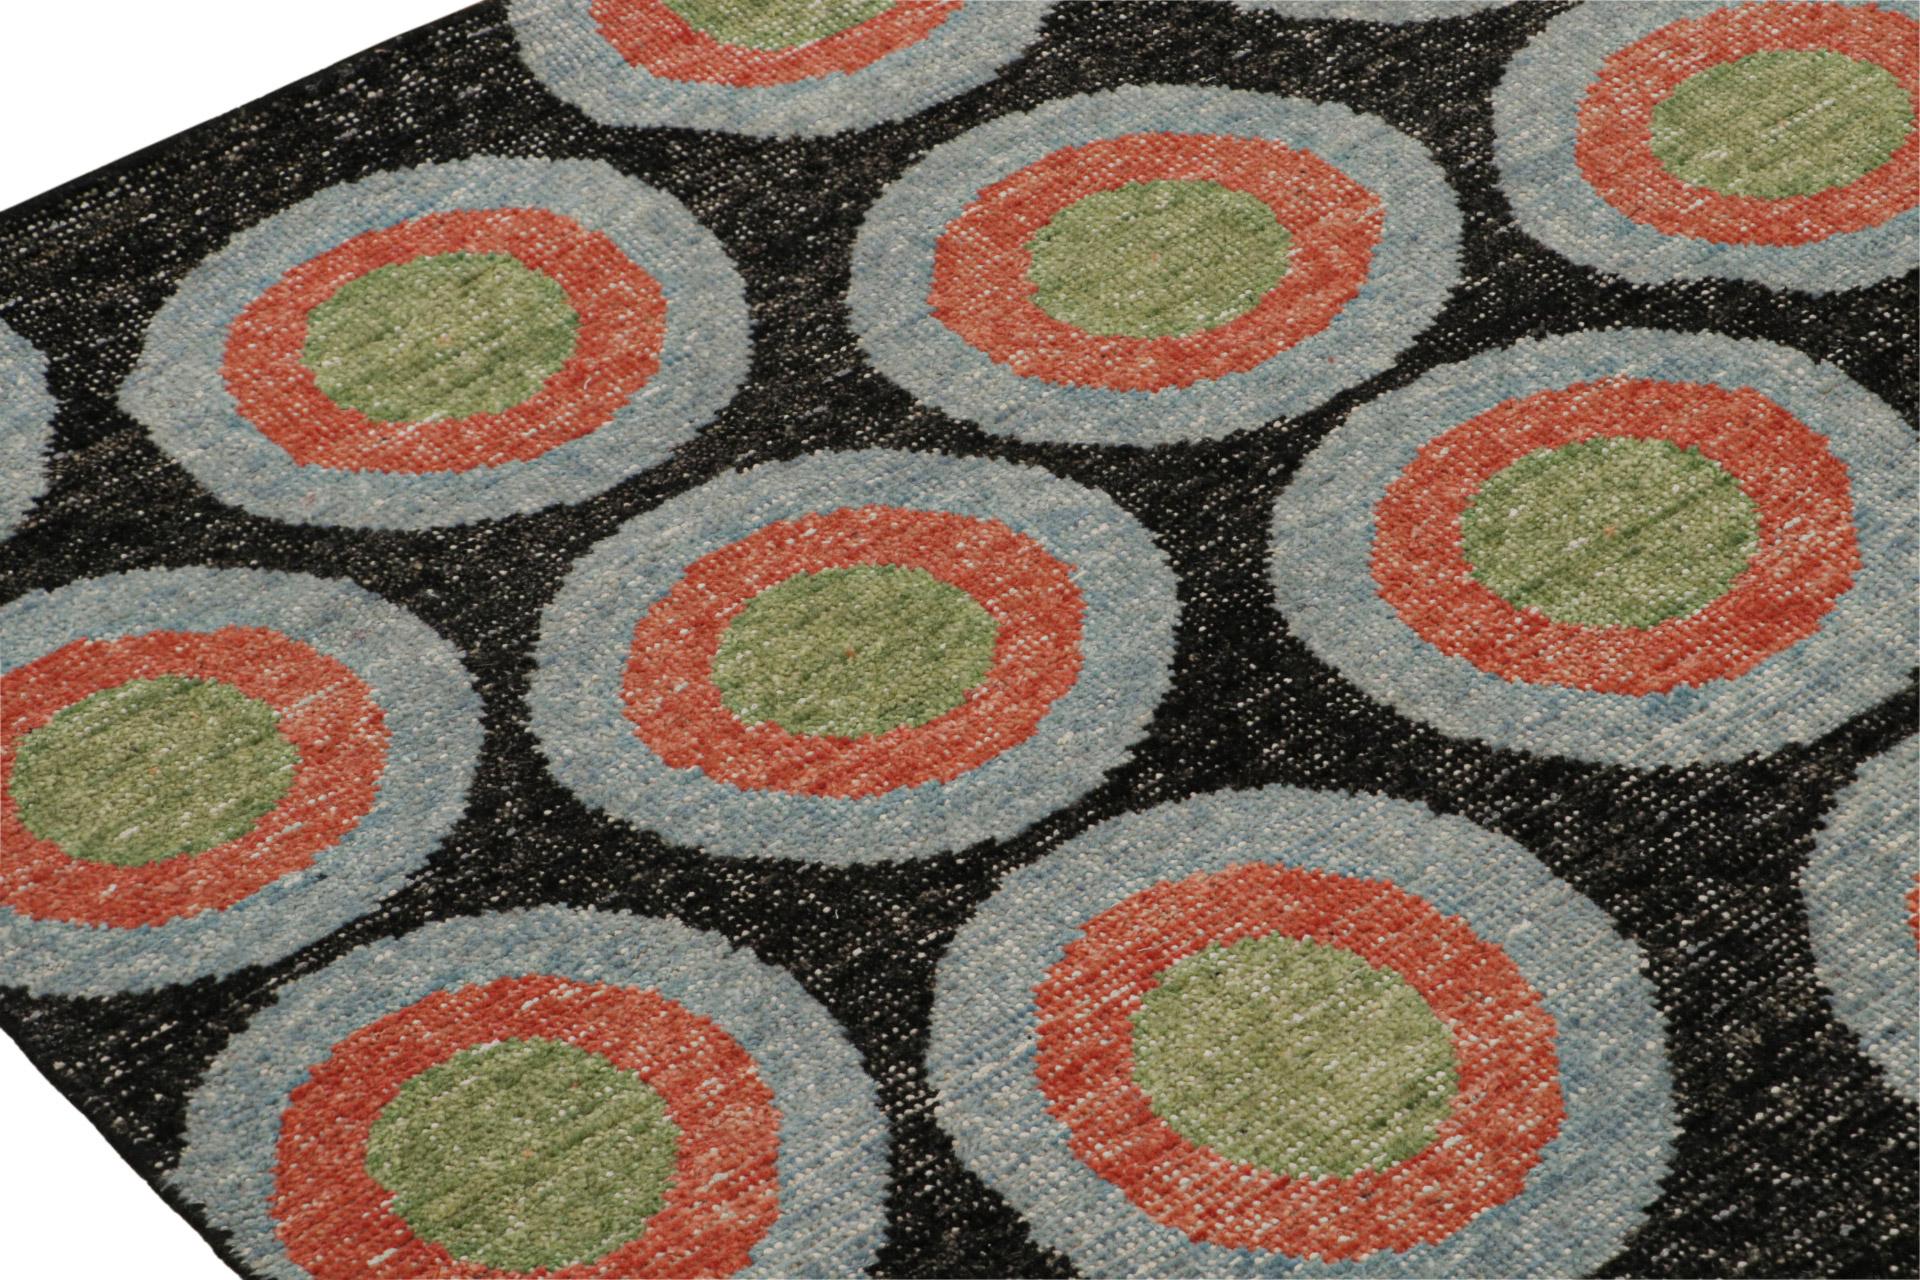 Noué à la main Rug & Kilim's Modern Deco Rug, with Geometric Patterns in Green, Orange and Blue (en anglais) en vente